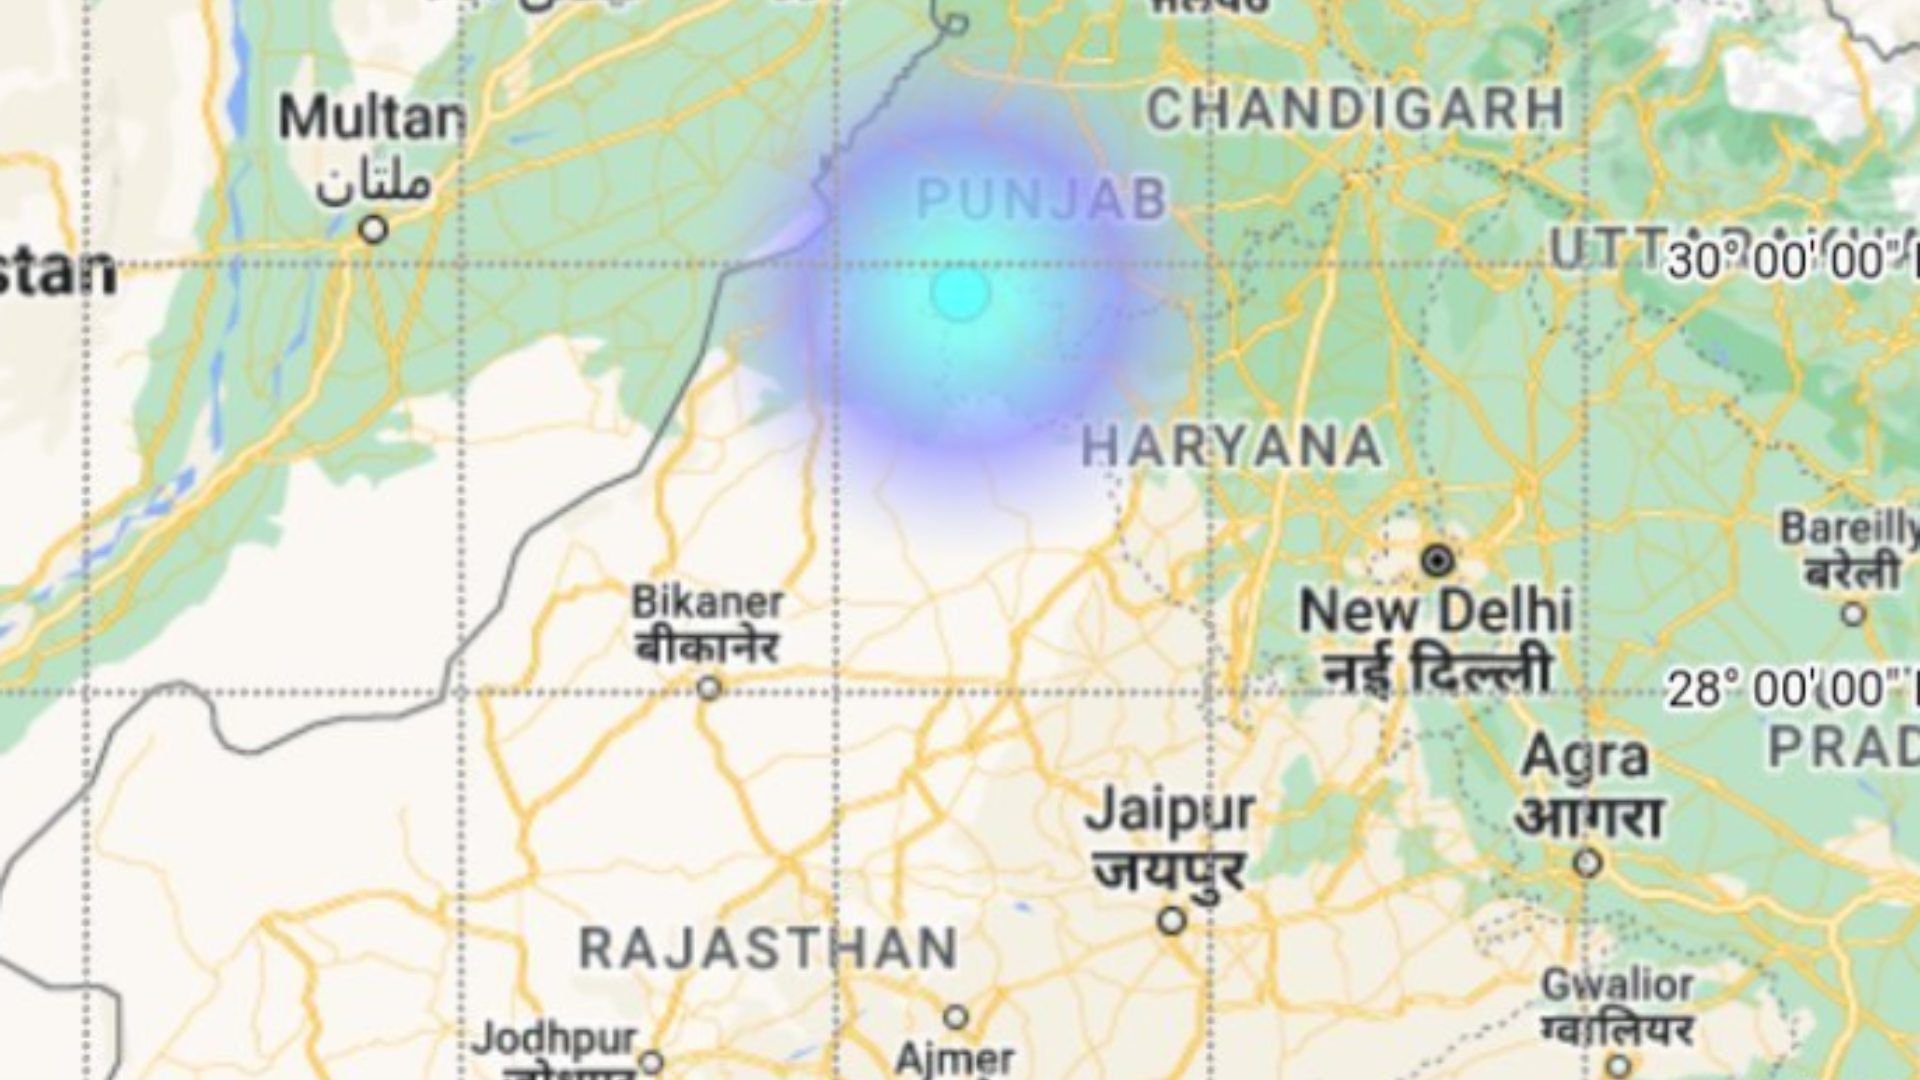 Earthquake hits Sirsa, Haryana: Magnitude 3.2 tremor reported